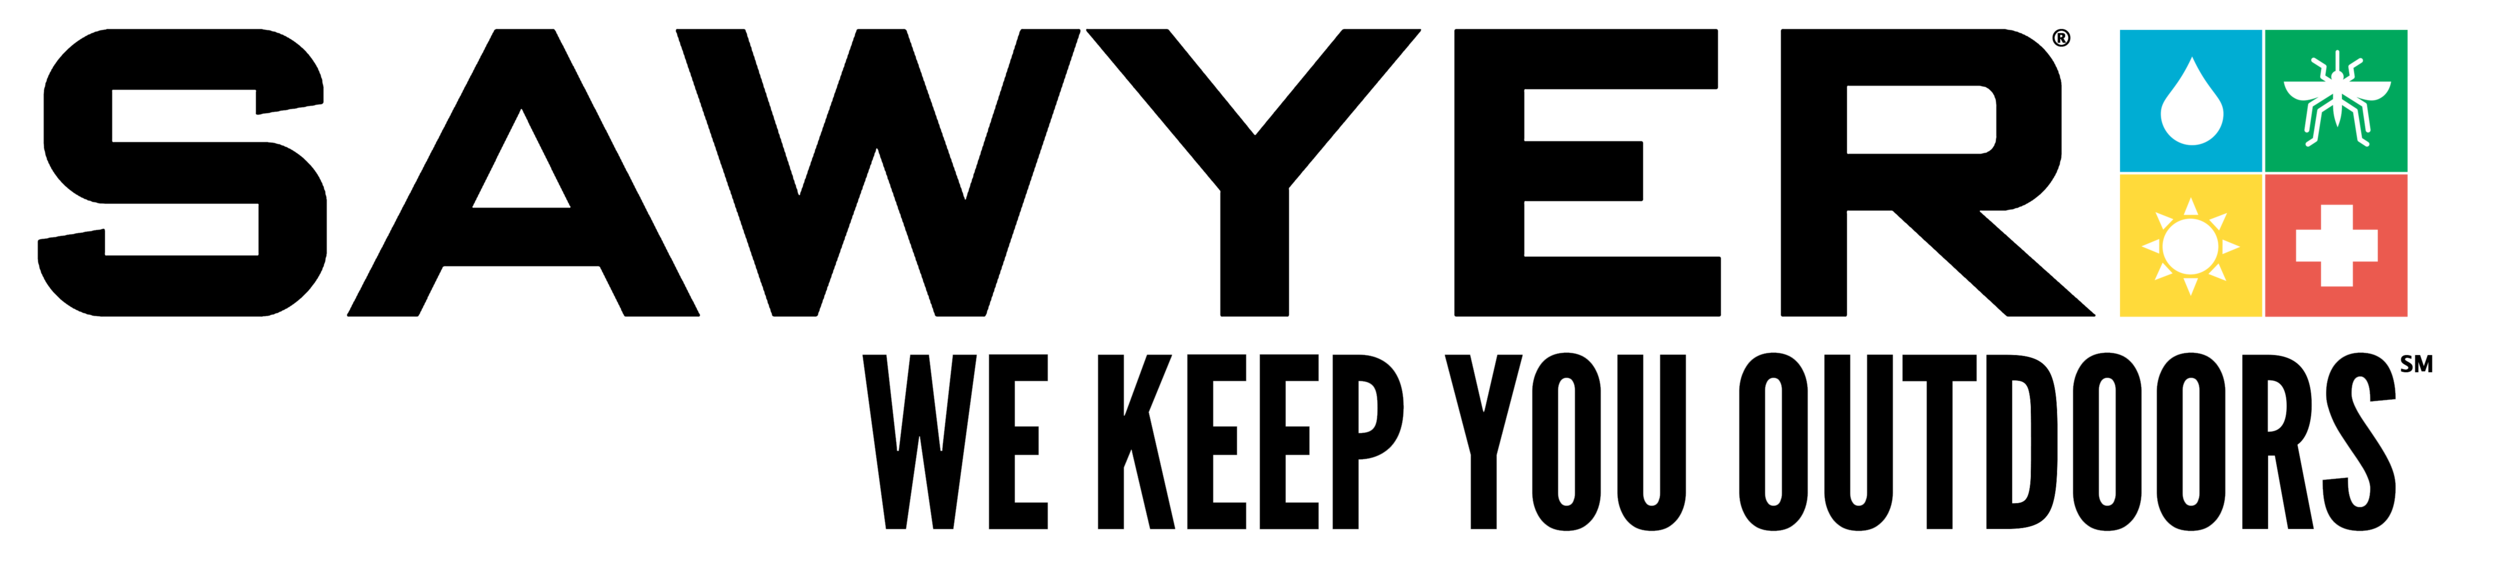 Sawyer WKYO logo 2017 color.png